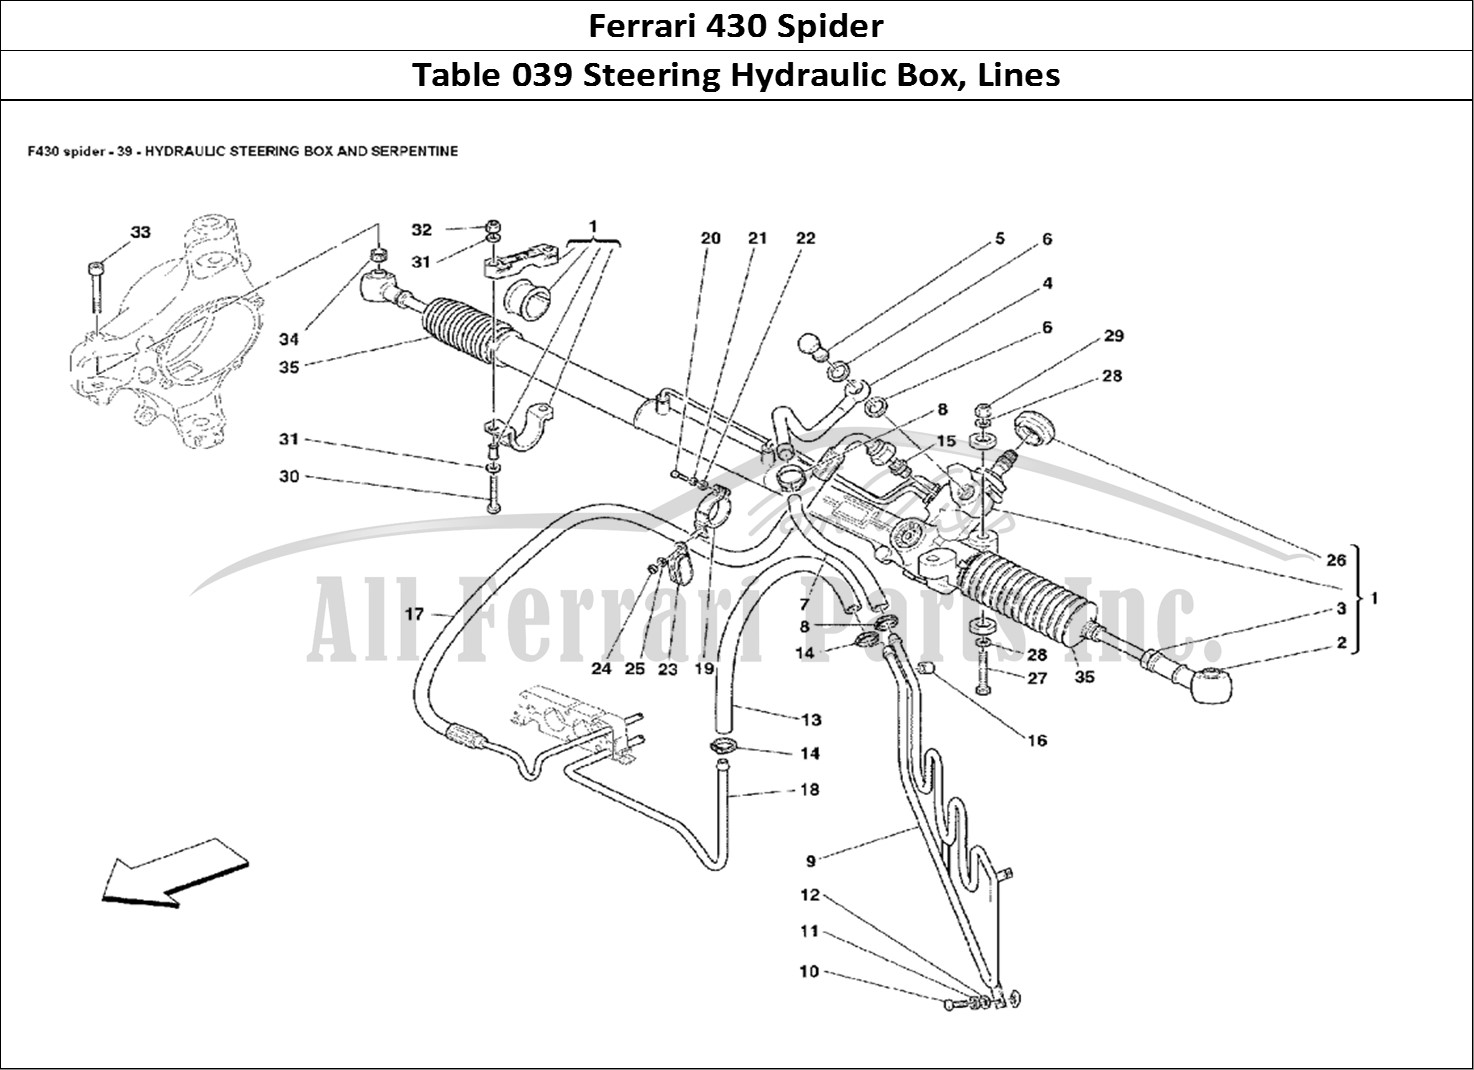 Ferrari Parts Ferrari 430 Spider Page 039 Hydraulic Steering Box an